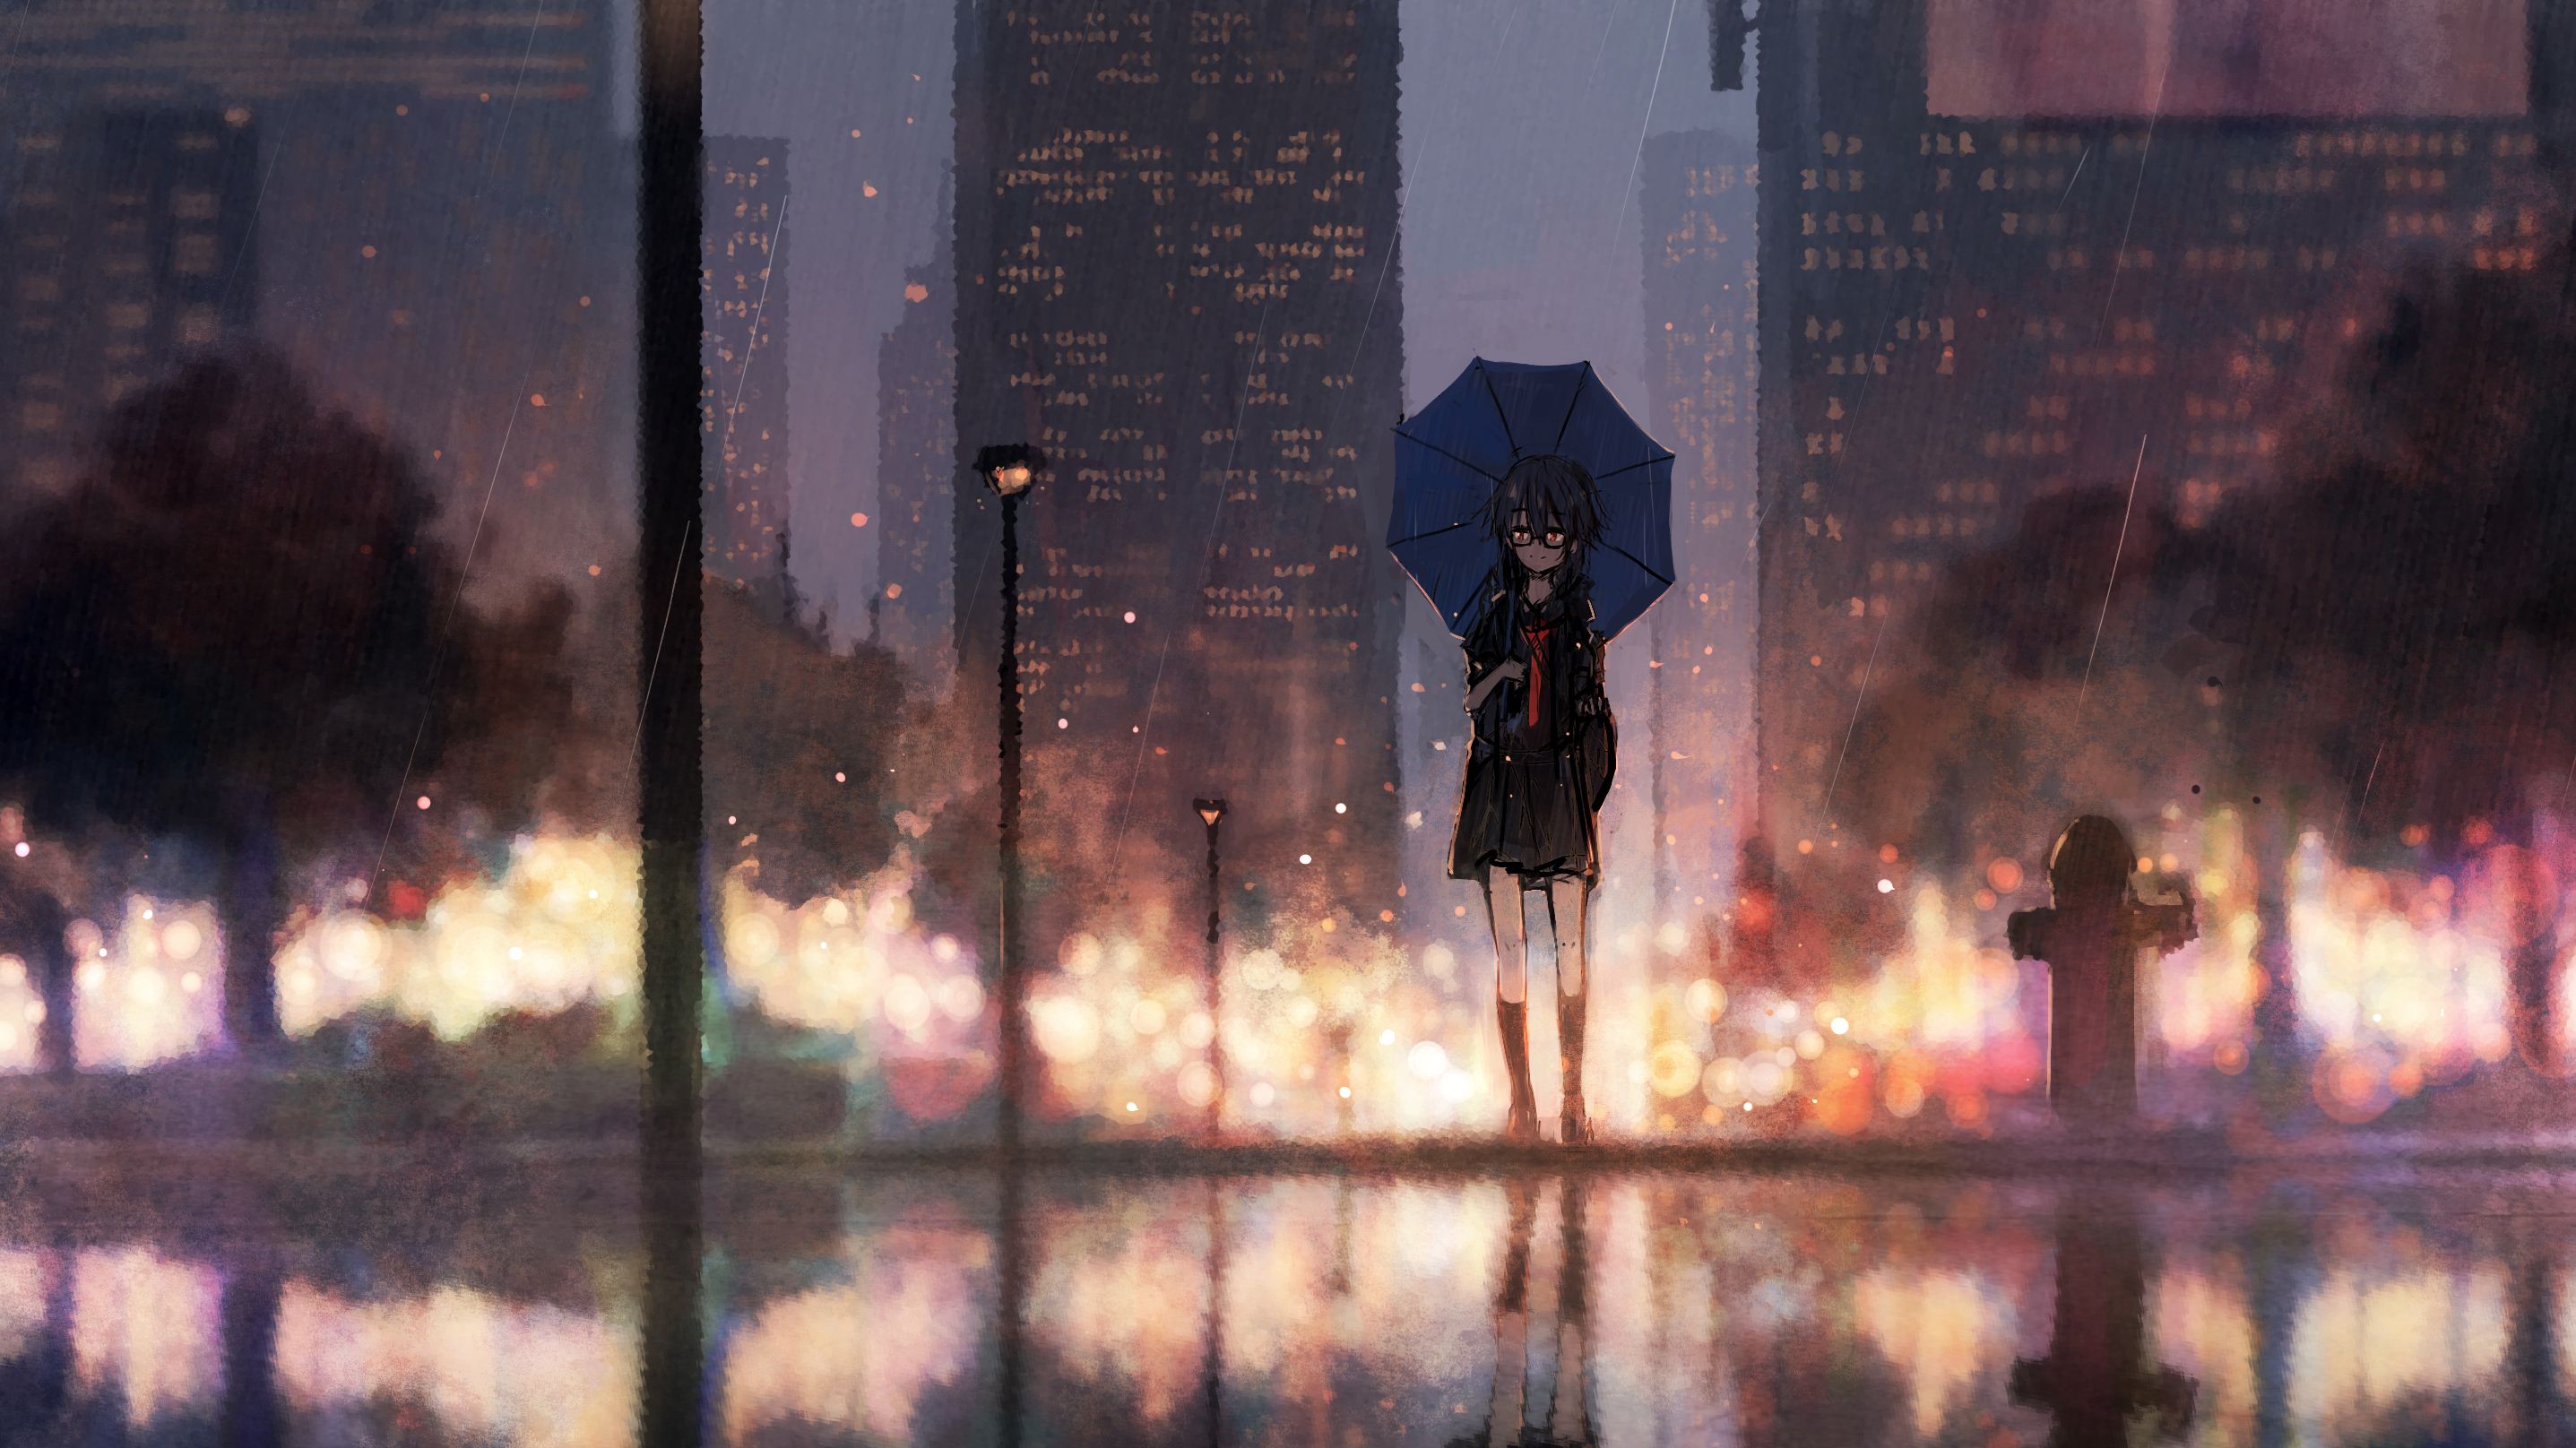 Anime Girl Rain Umbrella 1440P Resolution HD 4k Wallpaper, Image, Background, Photo and Picture